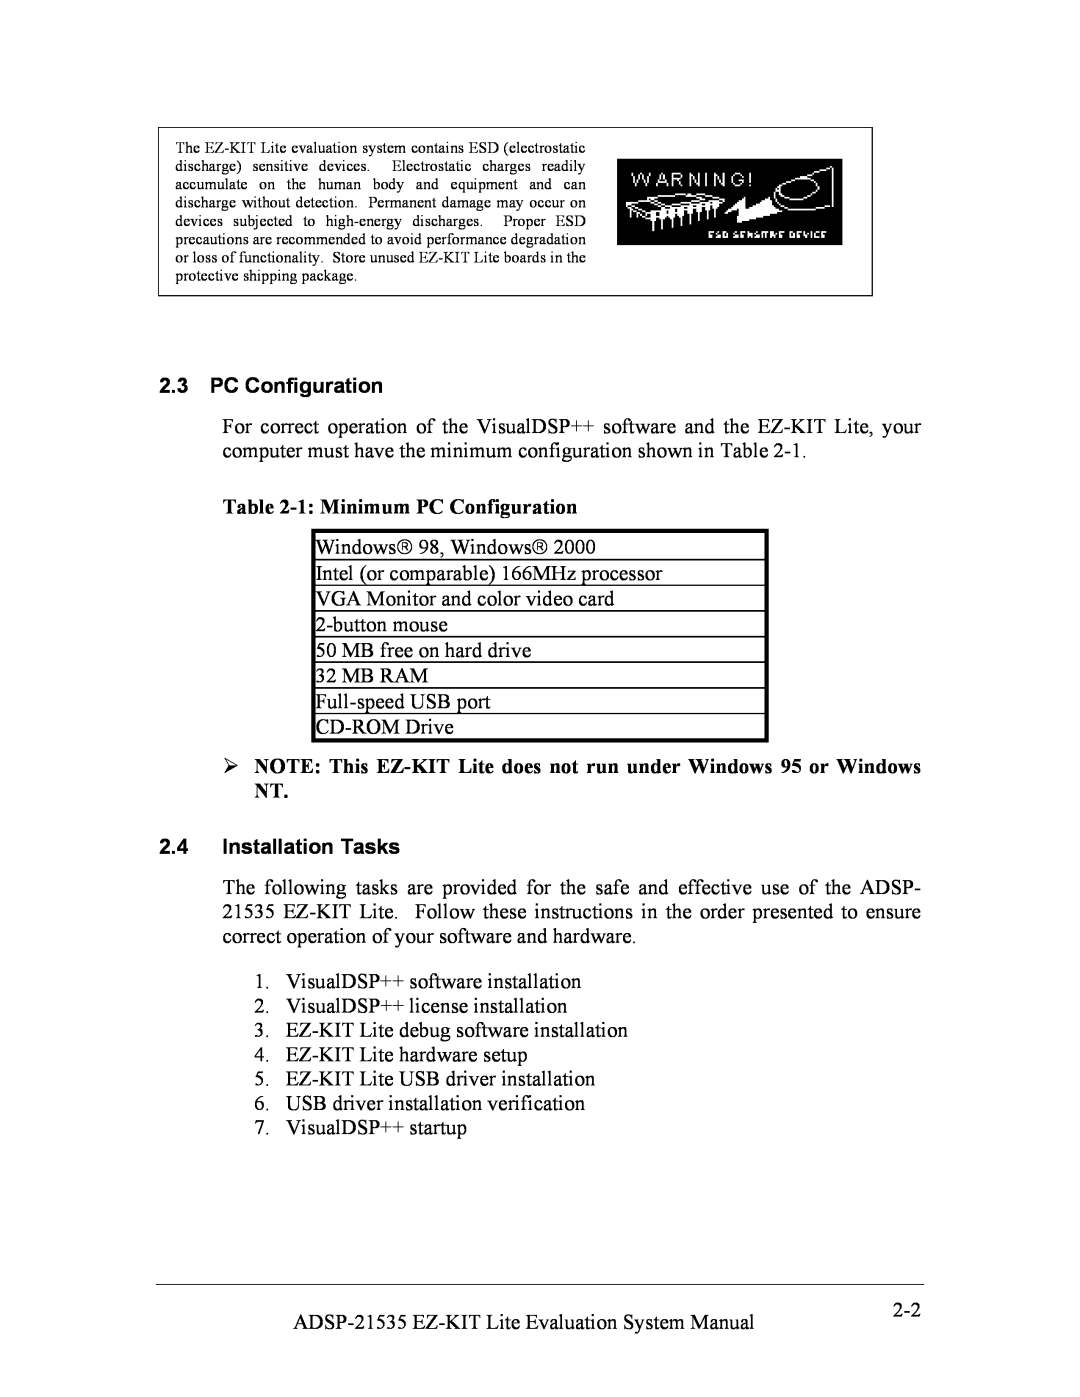 Analog Devices ADSP-21535 E-KIT LITE, 82-0000603-01 system manual 1 Minimum PC Configuration, Installation Tasks 